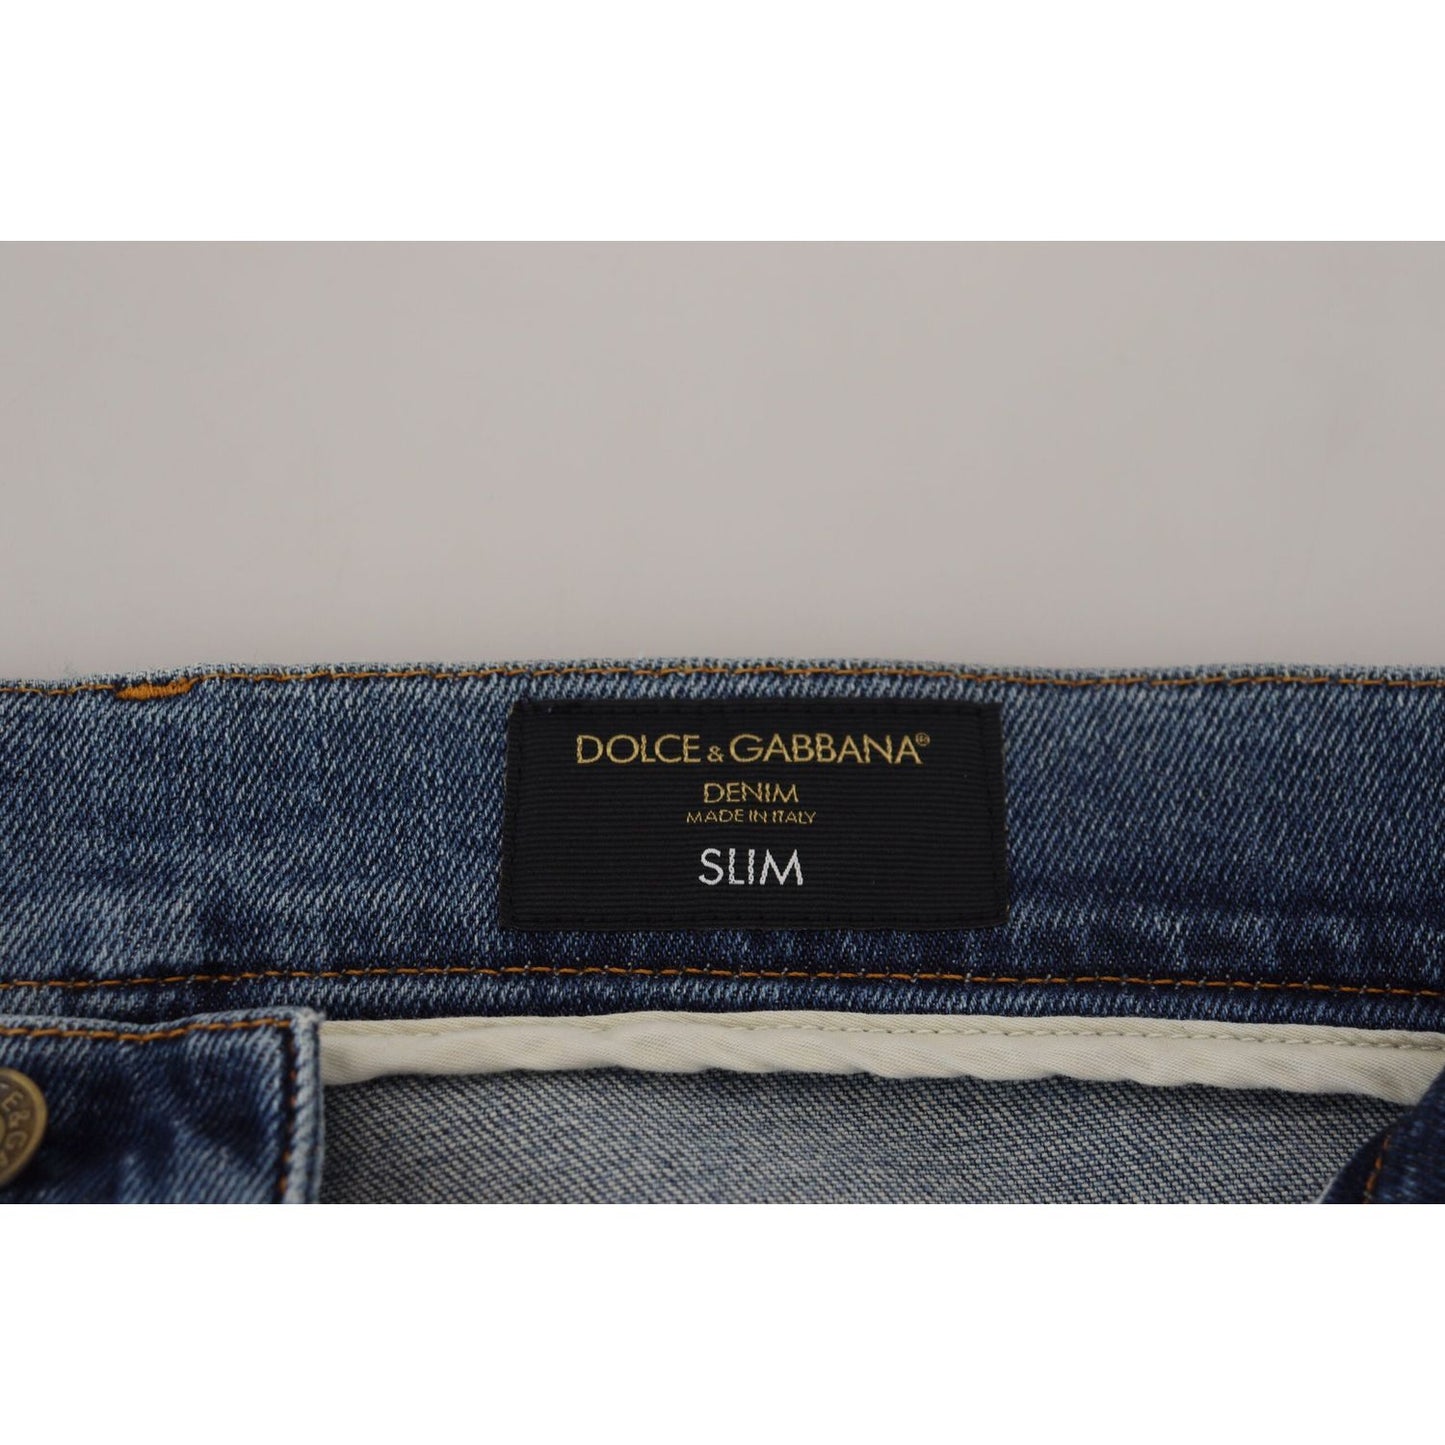 Dolce & Gabbana Chic Slim Fit Italian Denim Jeans blue-slim-fit-tattered-cotton-denim-jeans IMG_6144-scaled-a17a8208-2ed.jpg